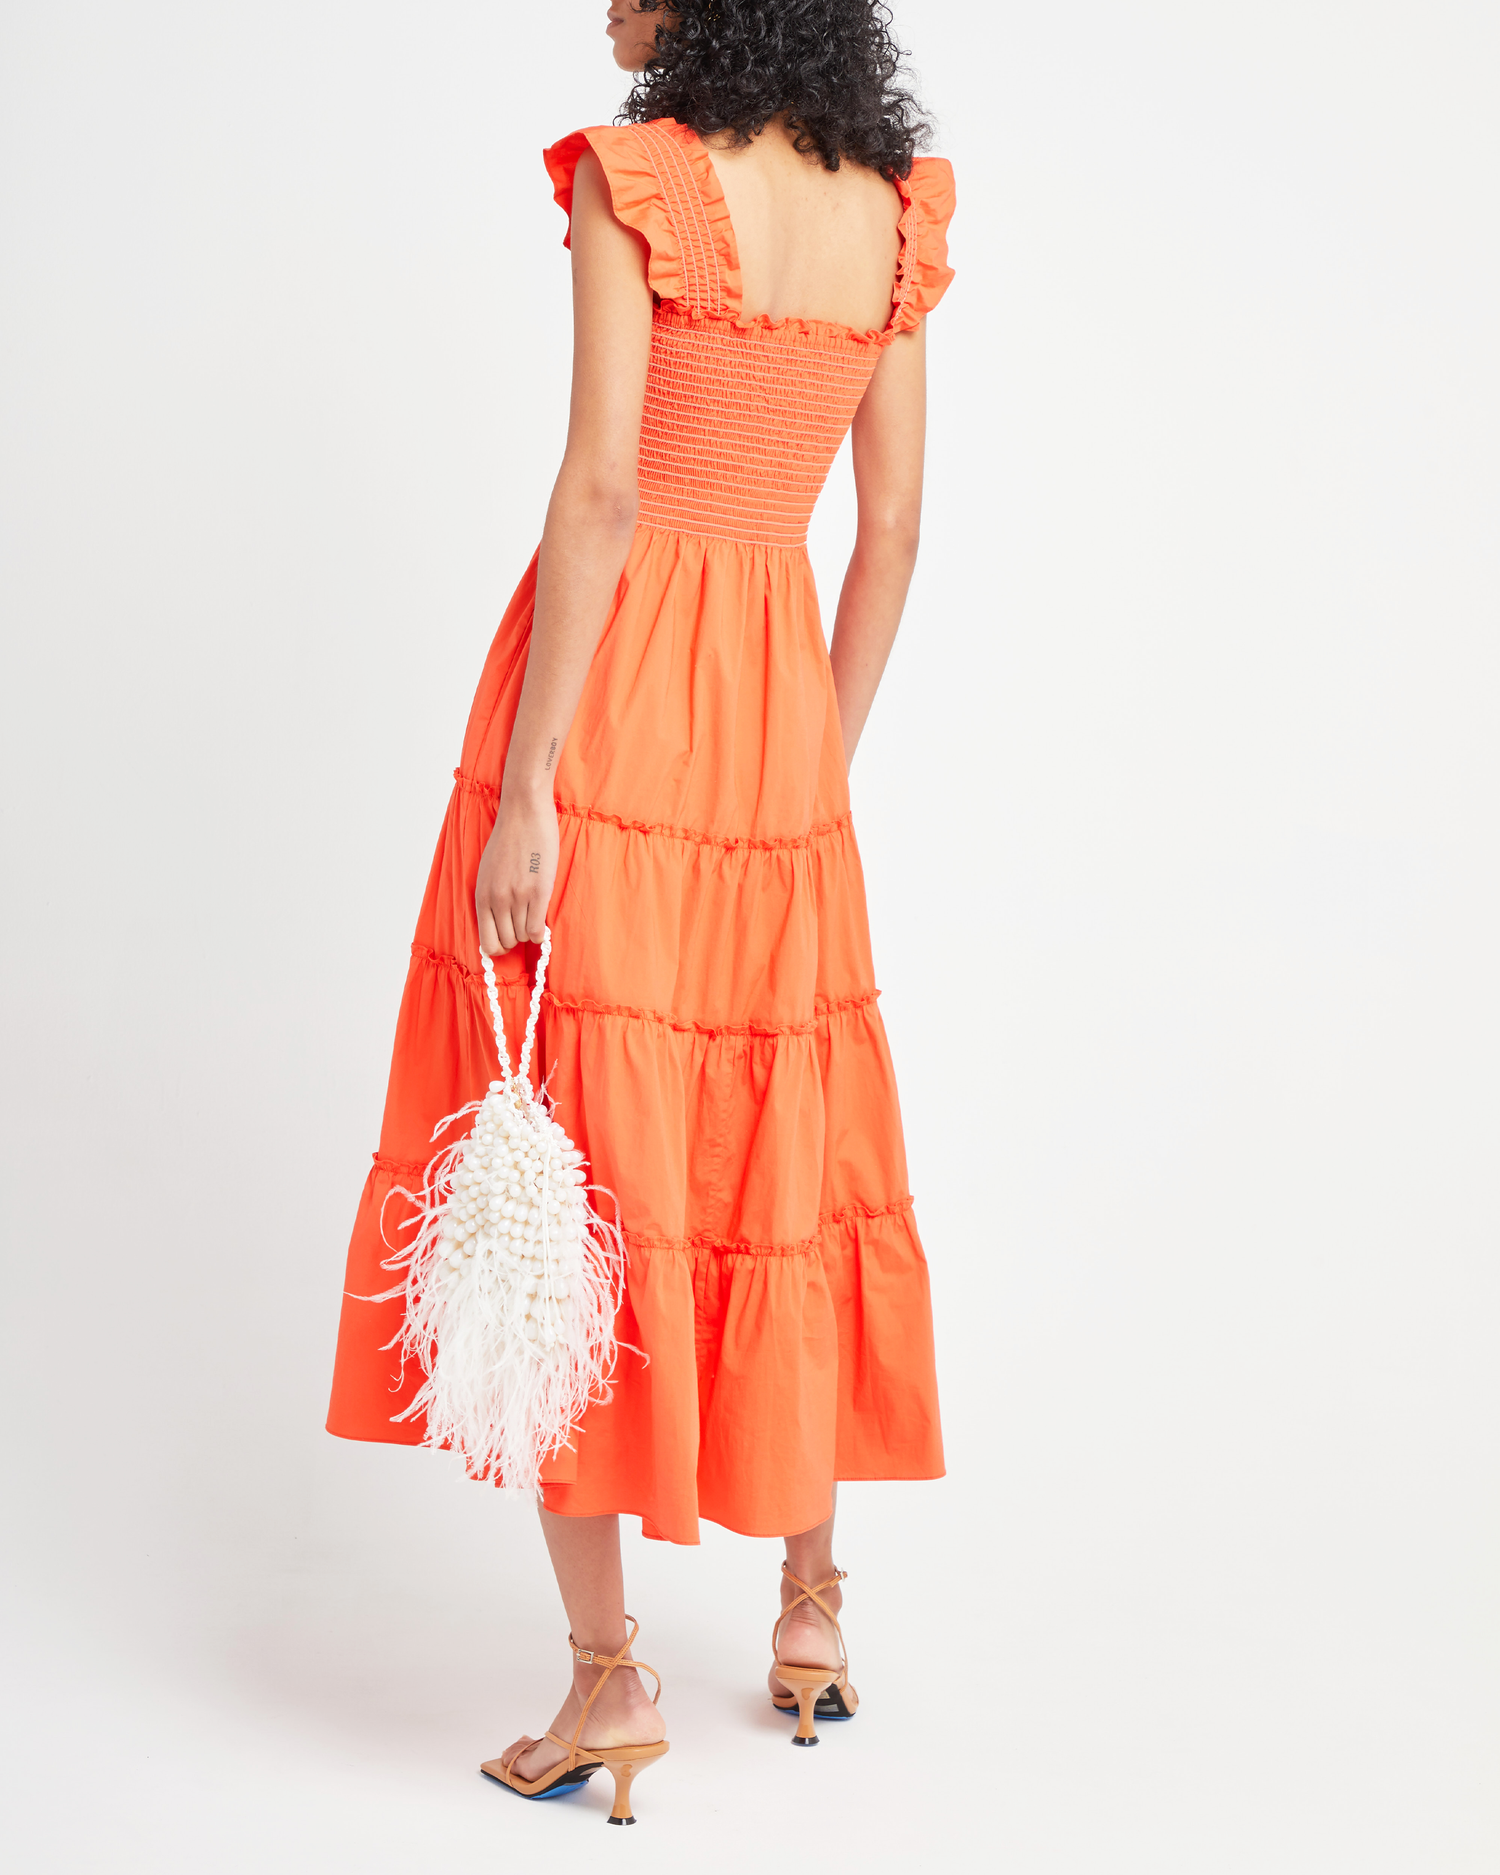 Second image of Calypso Maxi Dress, a orange maxi dress,ruffle cap sleeves, smocked bodice